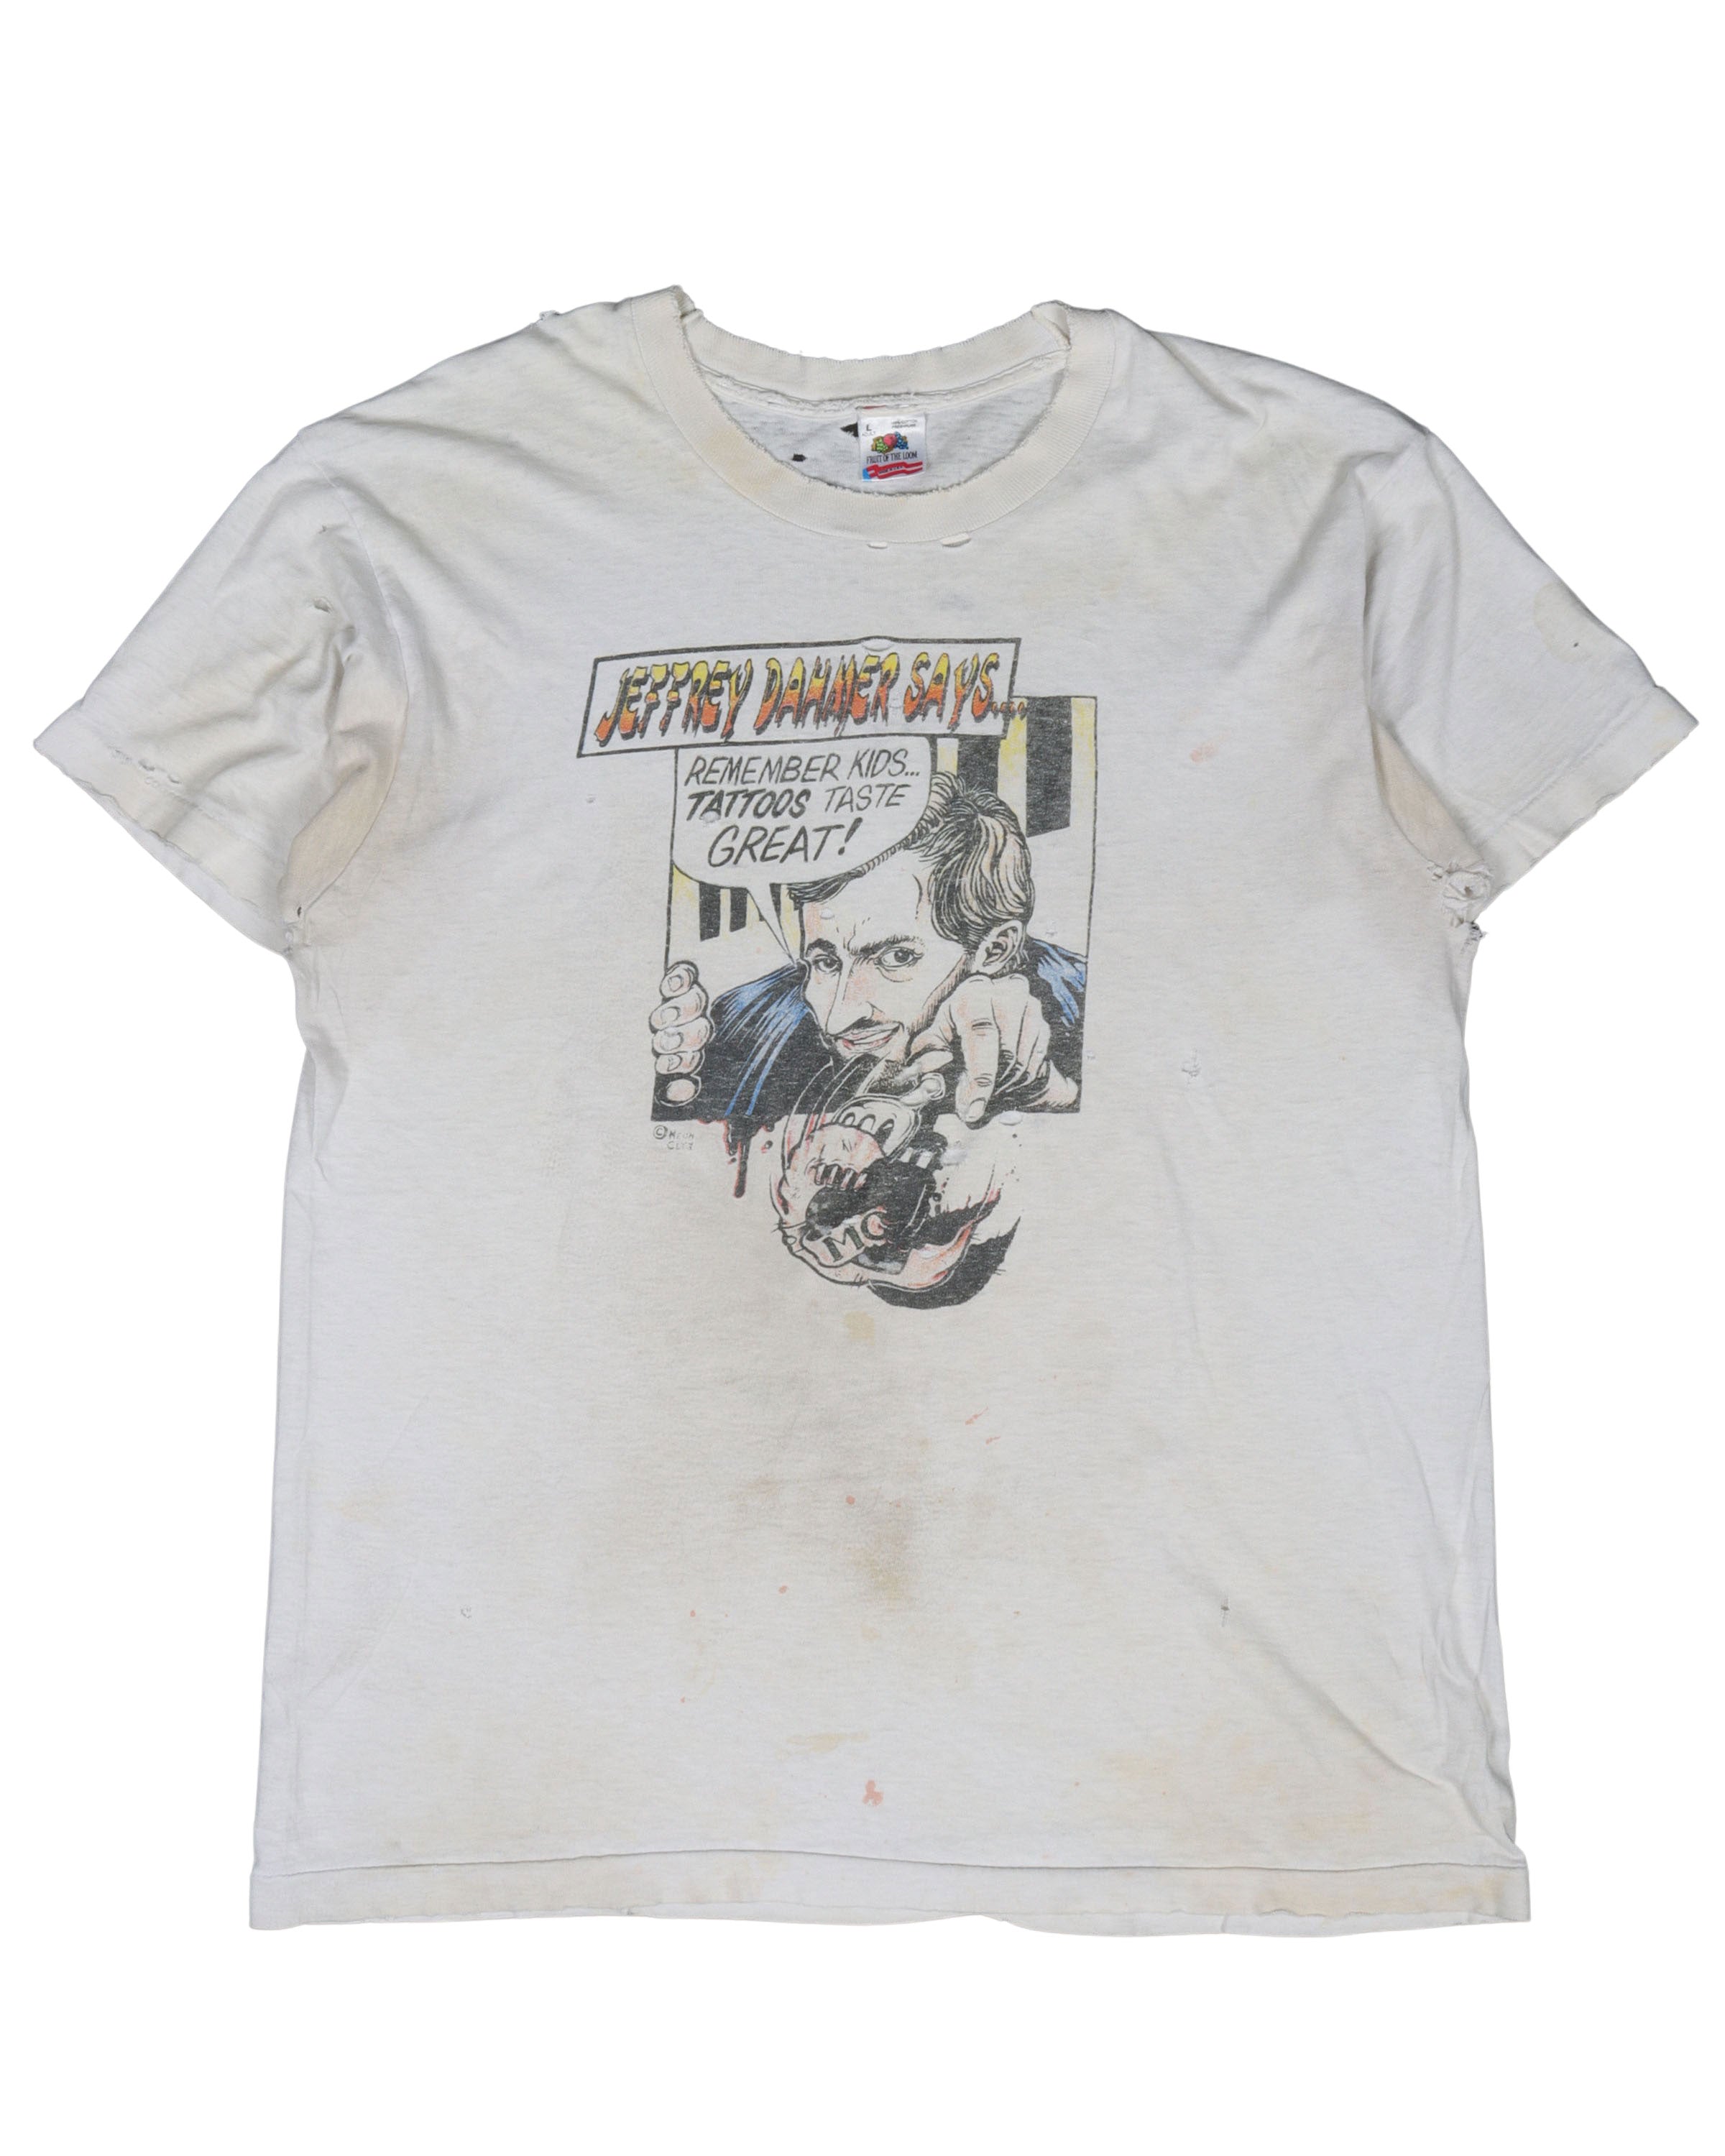 Jeffrey Dahmer "Tattoos Taste Good" T-Shirt